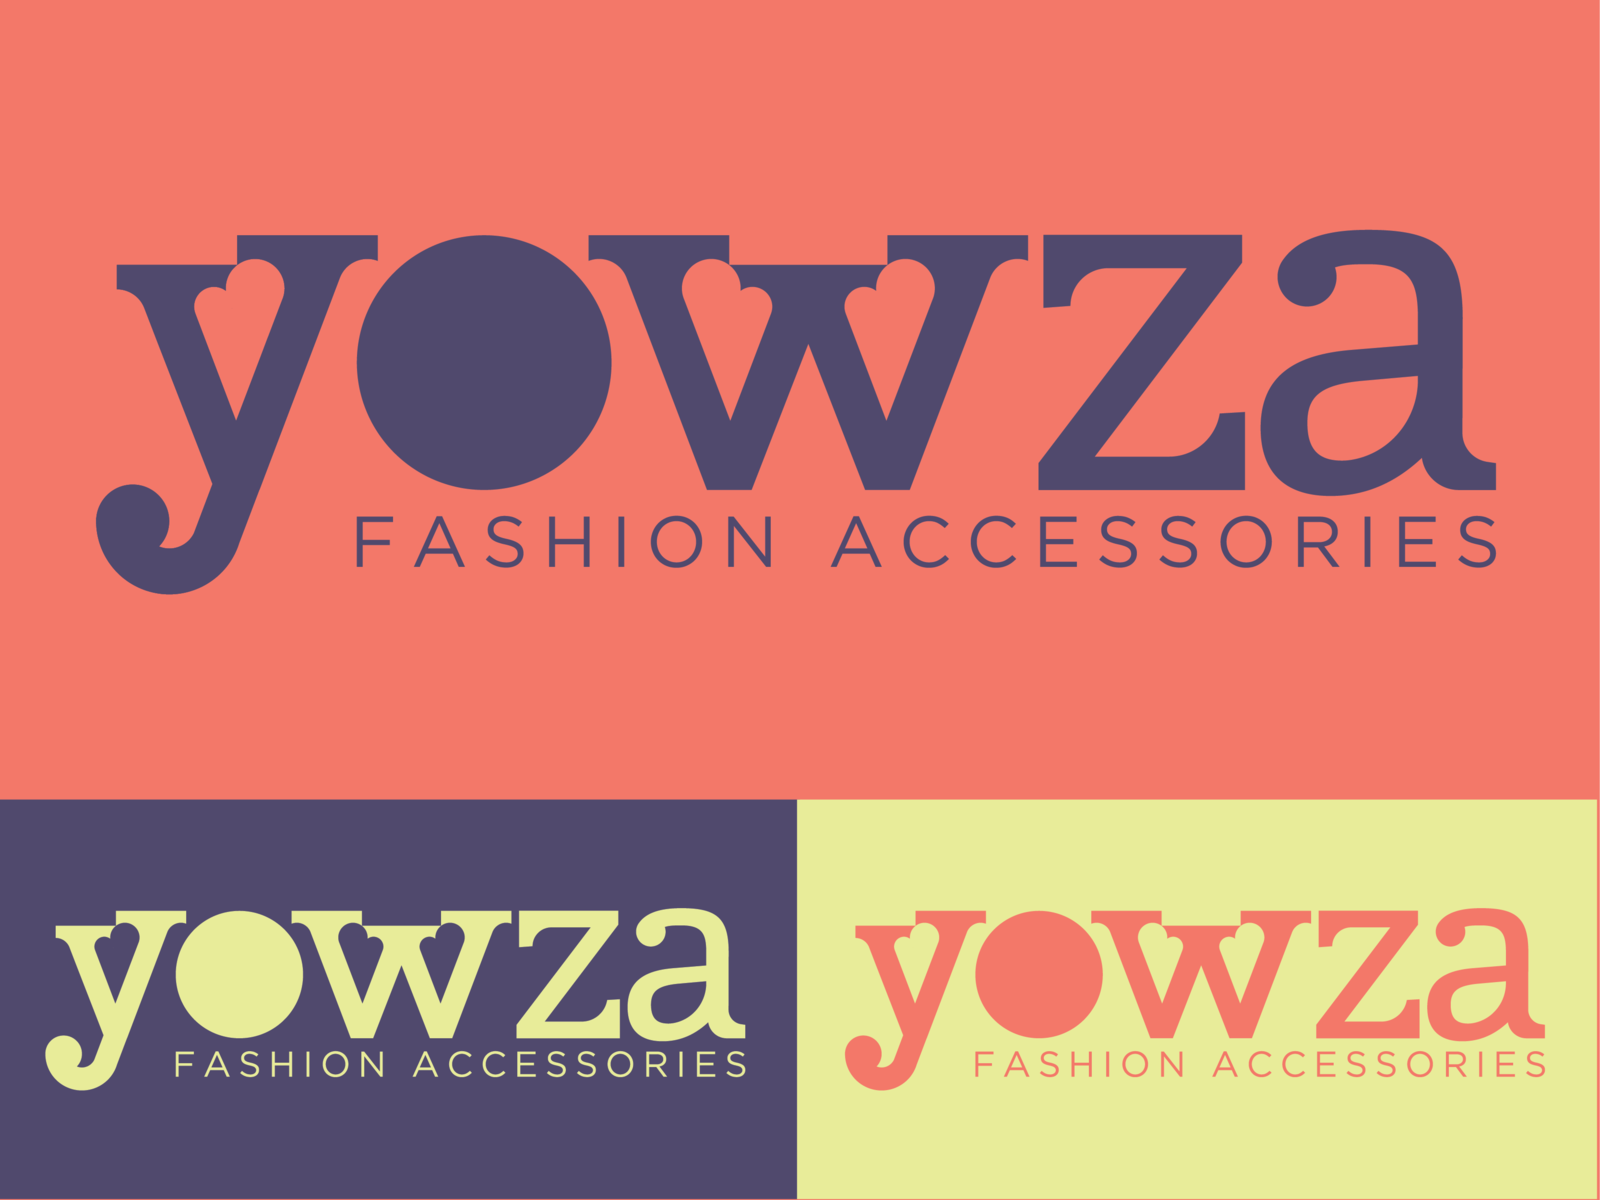 Yowza Fashion Accessories Logo by Andrea Maxwell on Dribbble